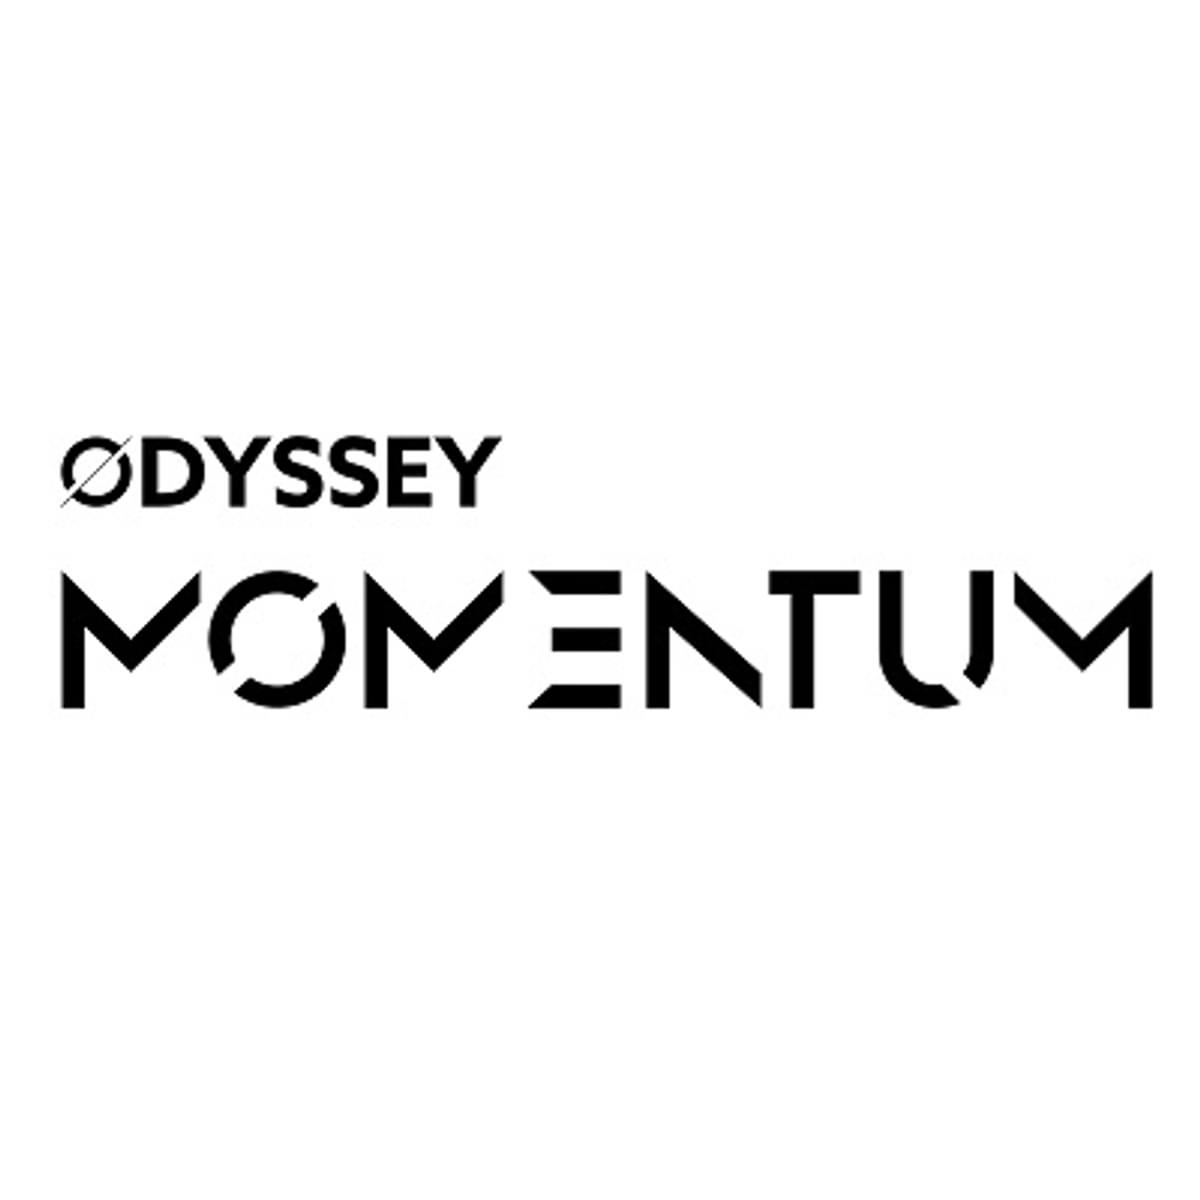 Odyssey Hackathon wordt Momentum image